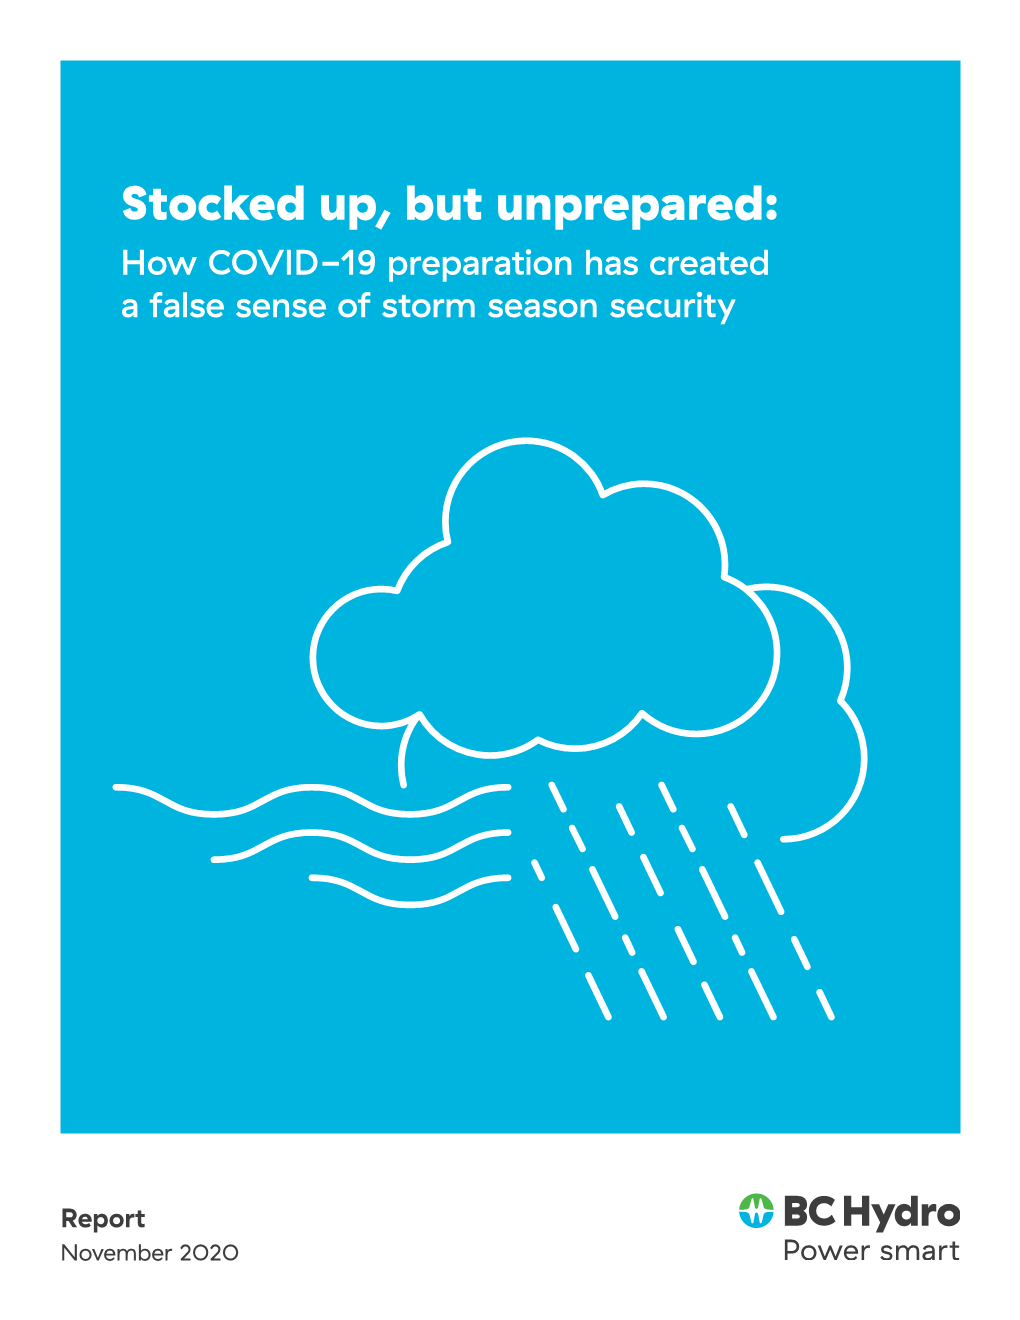 Stocked Up, but Unprepared: How COVID-19 Preparation Has Created a False Sense of Storm Season Security